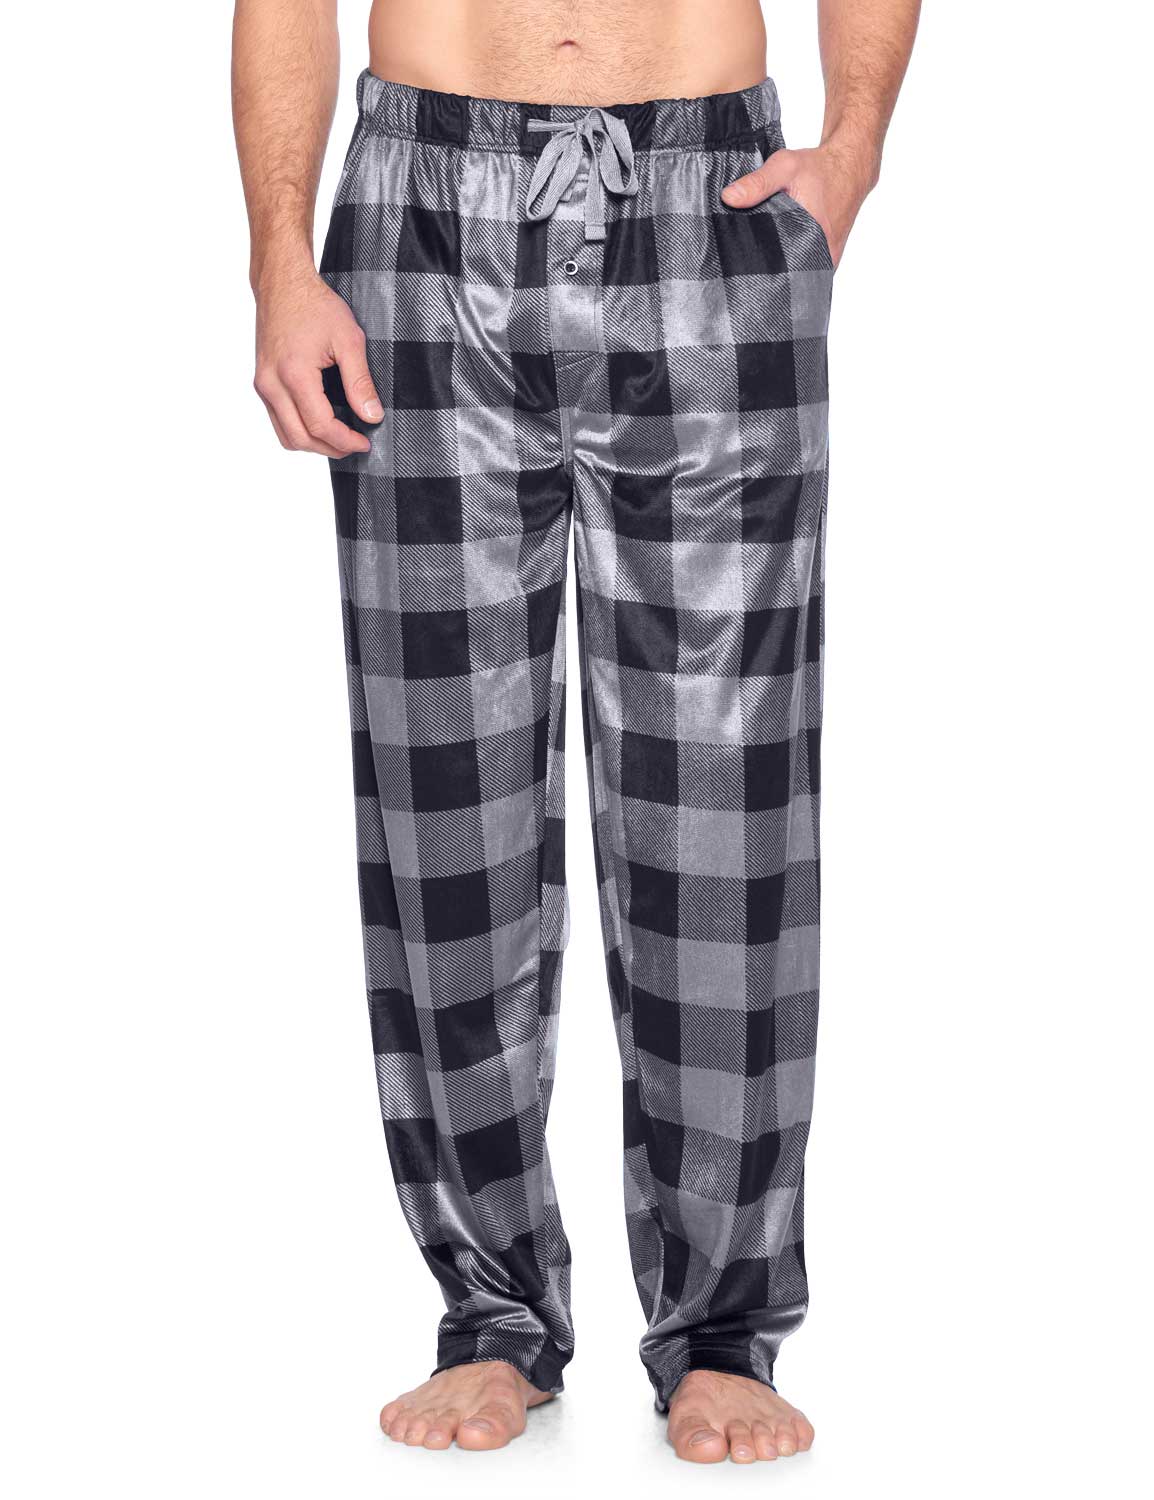 Ashford & Brooks Women's Plush Mink Fleece Pajama Sleep Pants